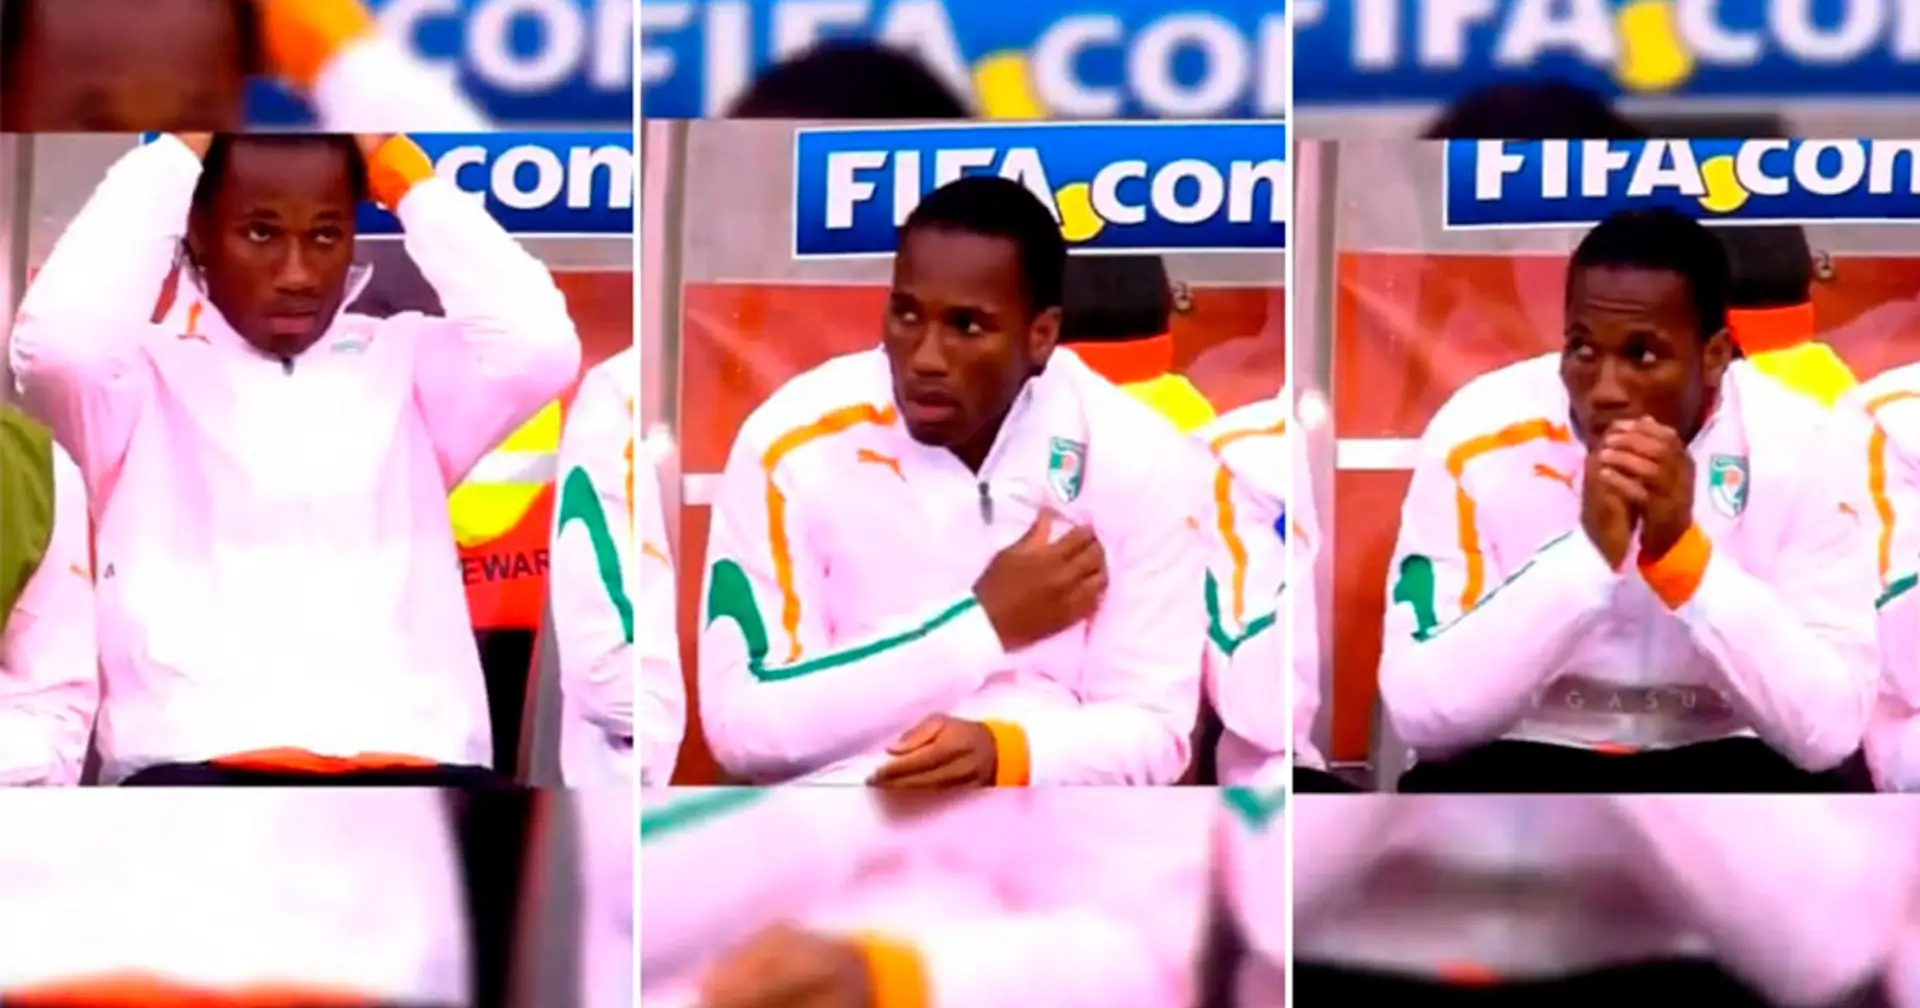 Cristiano Ronaldo ließ Didier Drogba während der WM 2010 zu Gott um Hilfe beten